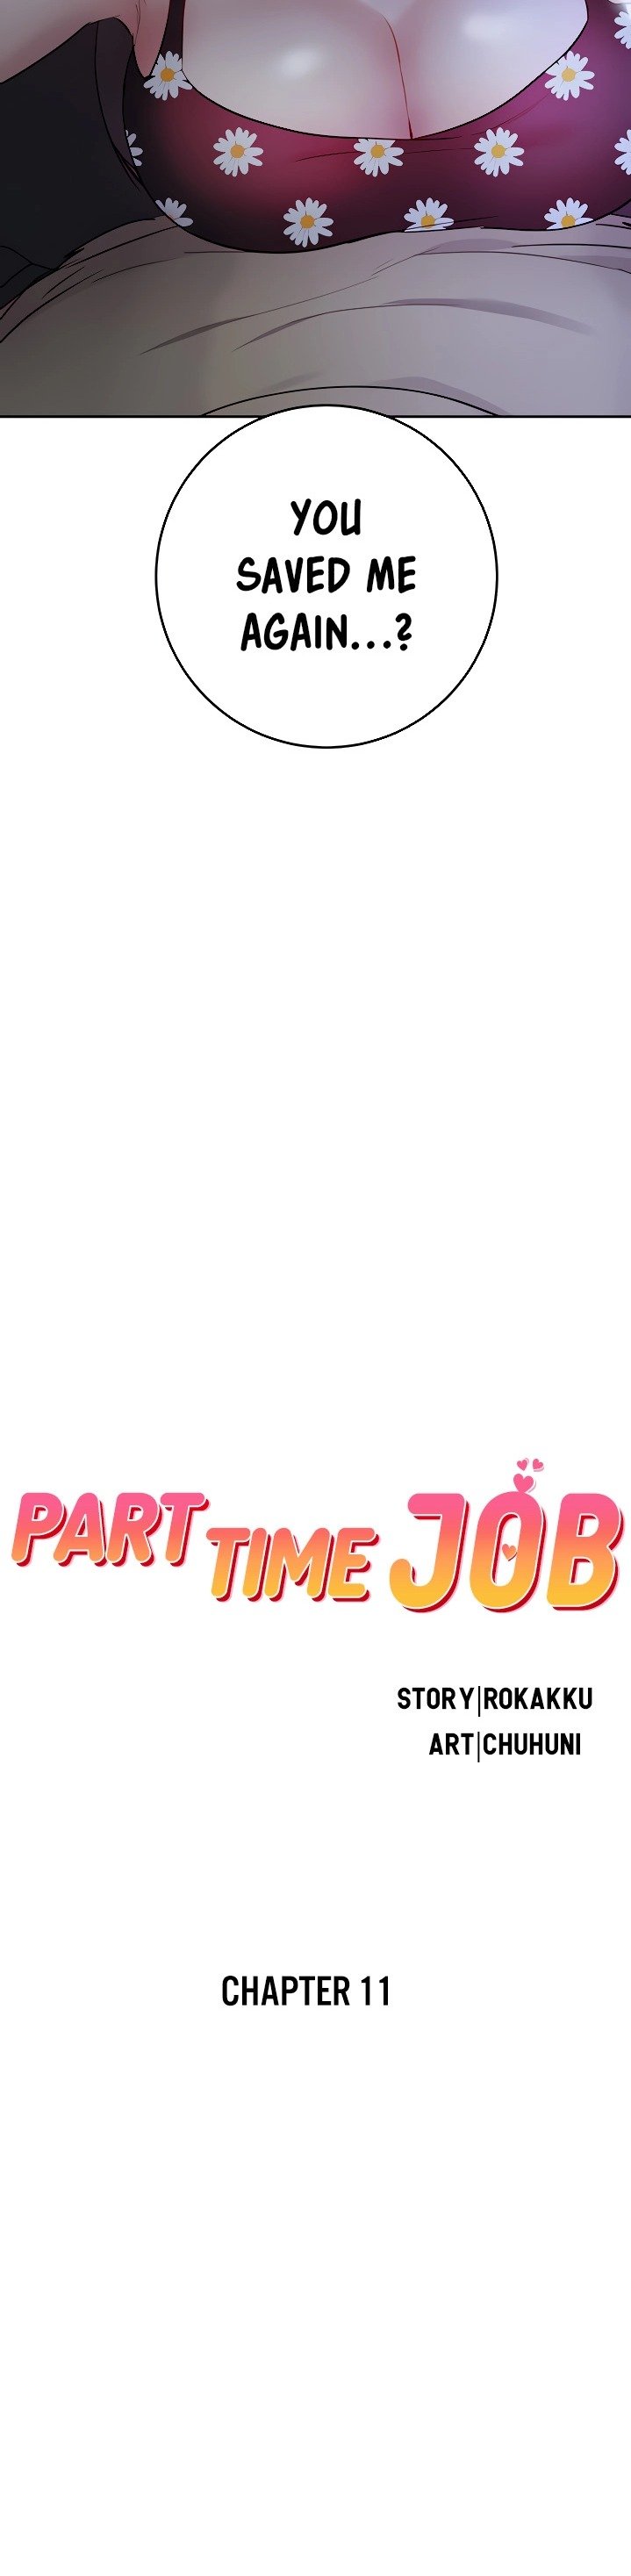 part-time-job-chap-11-2